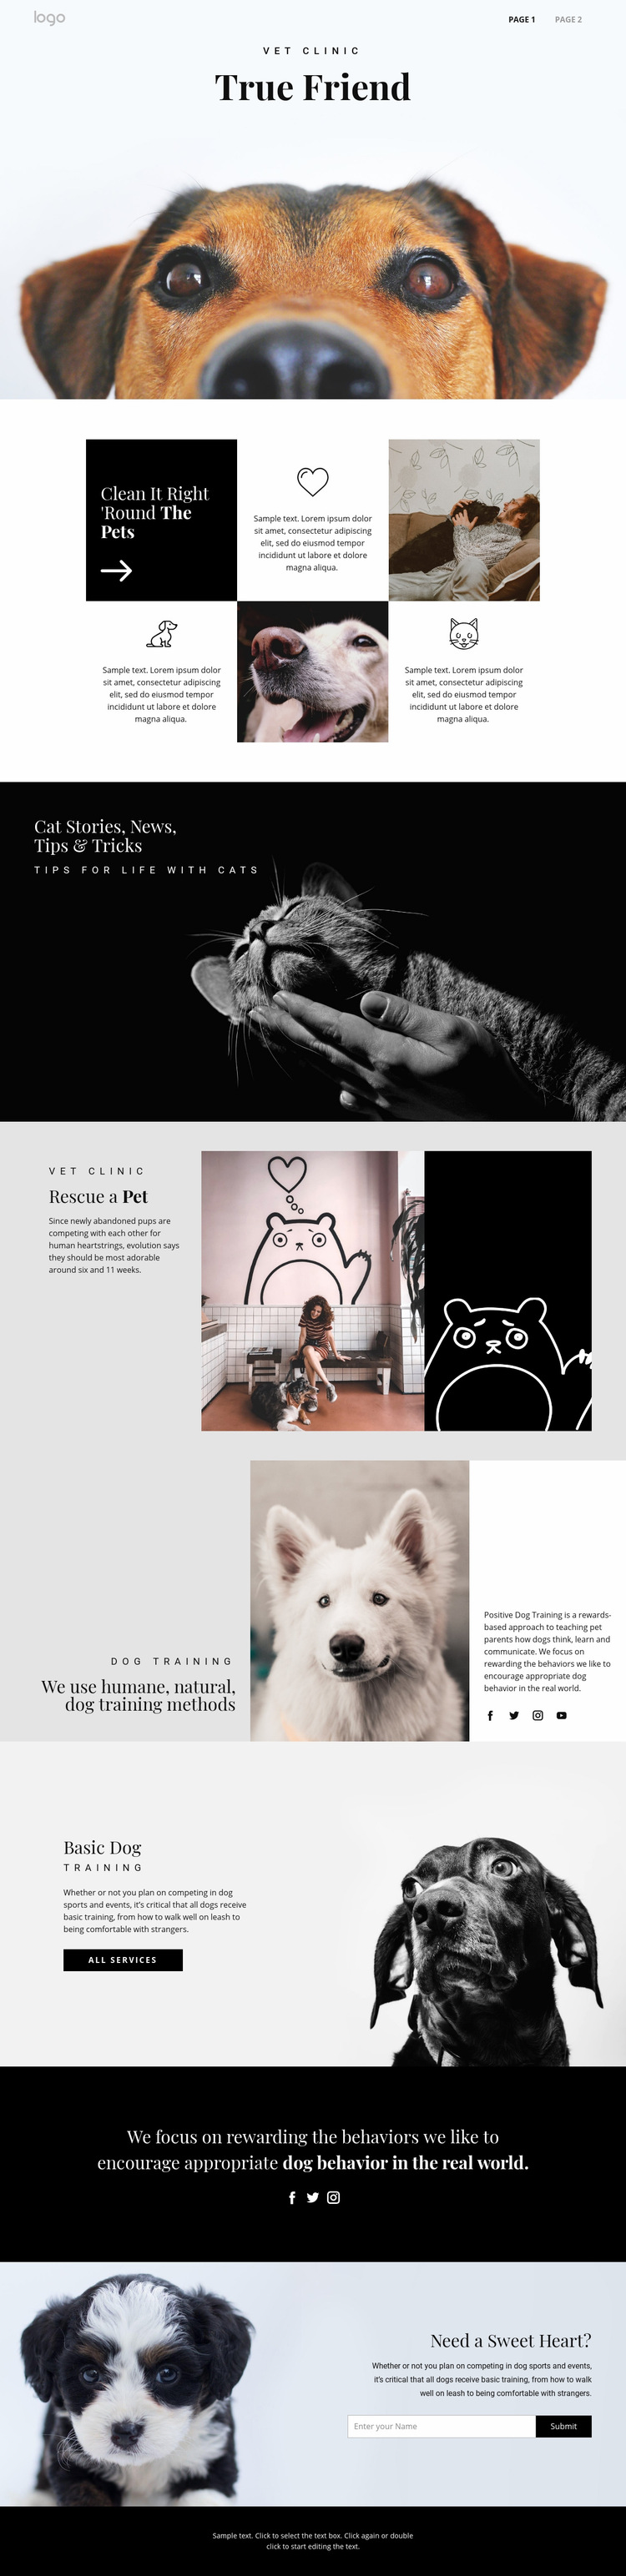 Finding your true friend pet Web Page Design